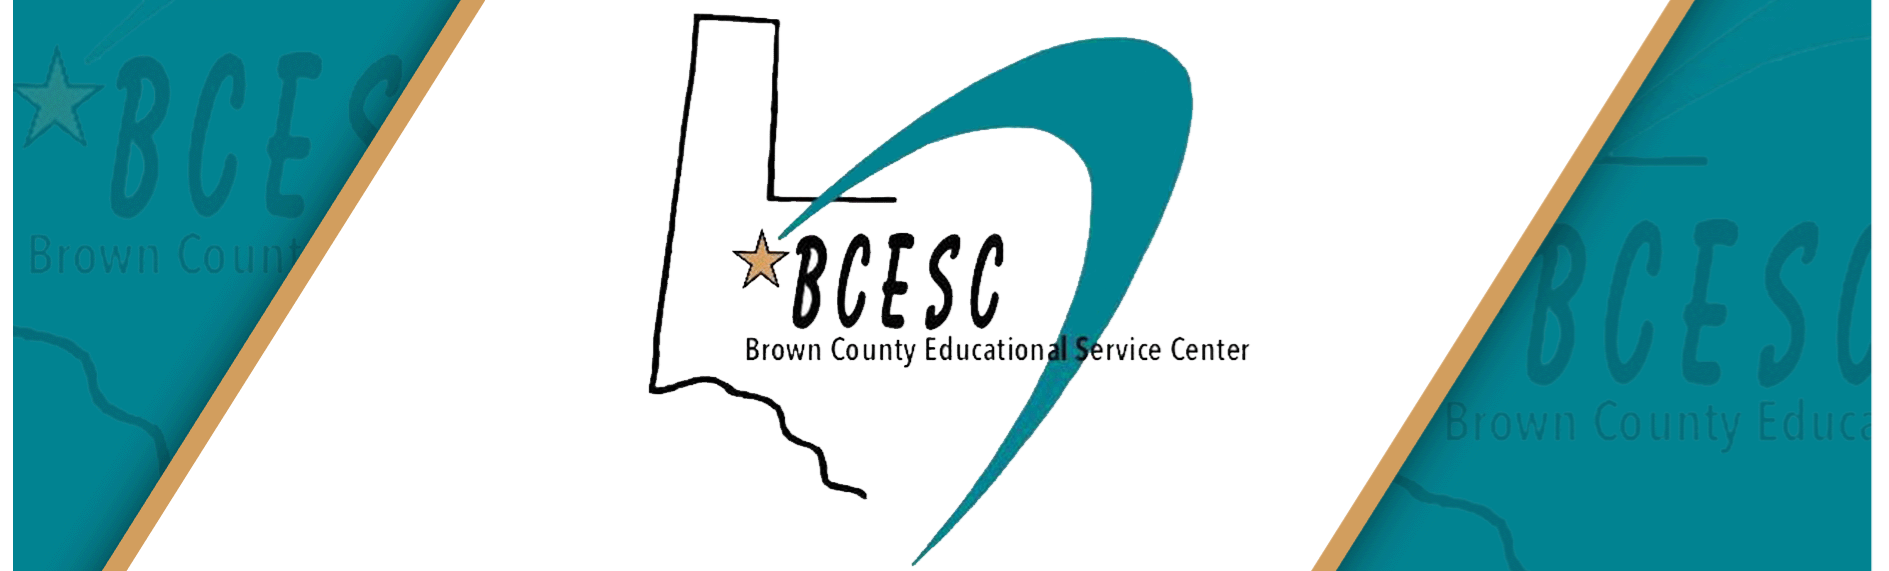 BCESC Brown County Educational Service Center